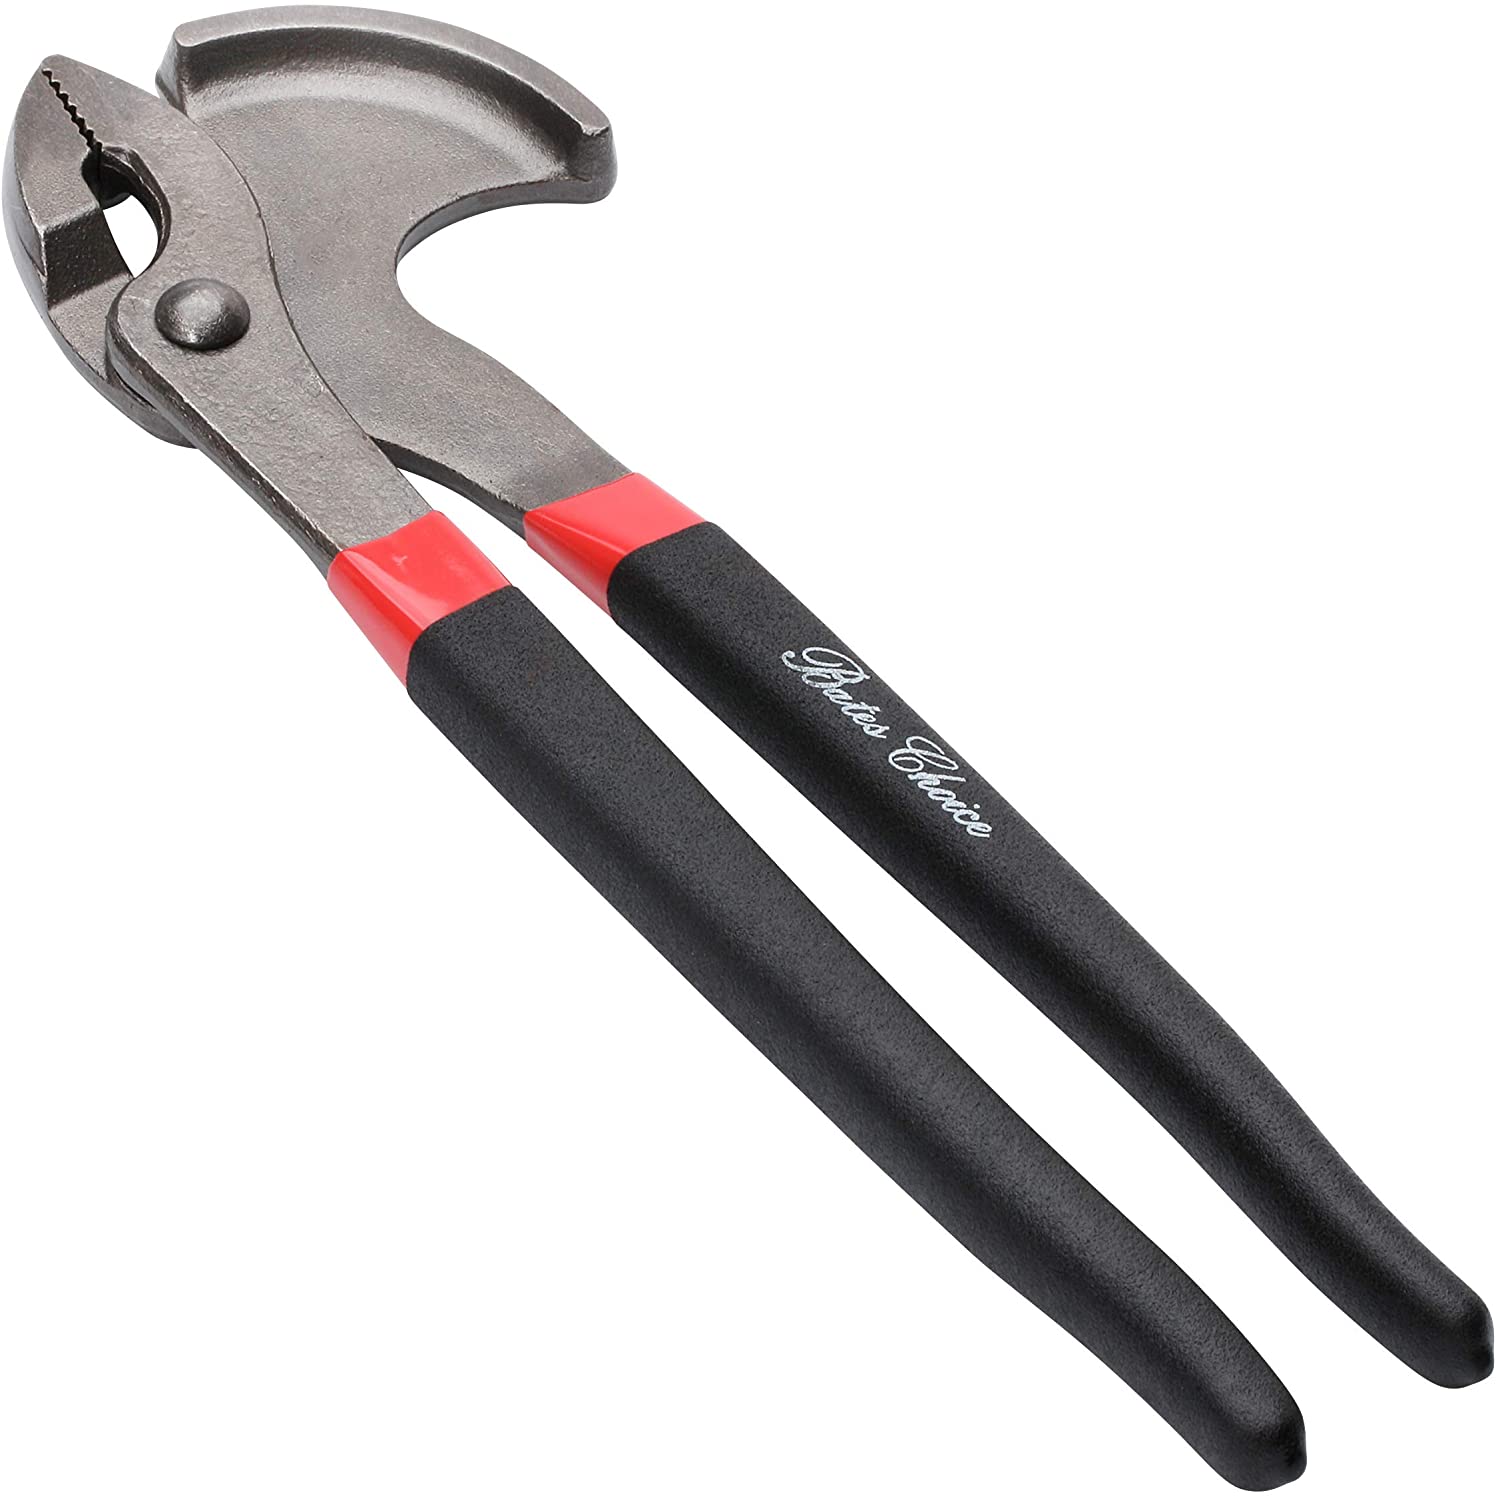 Bates- Nail Puller, Pliers, Nail Remover Tool, Multi Tool, Hand